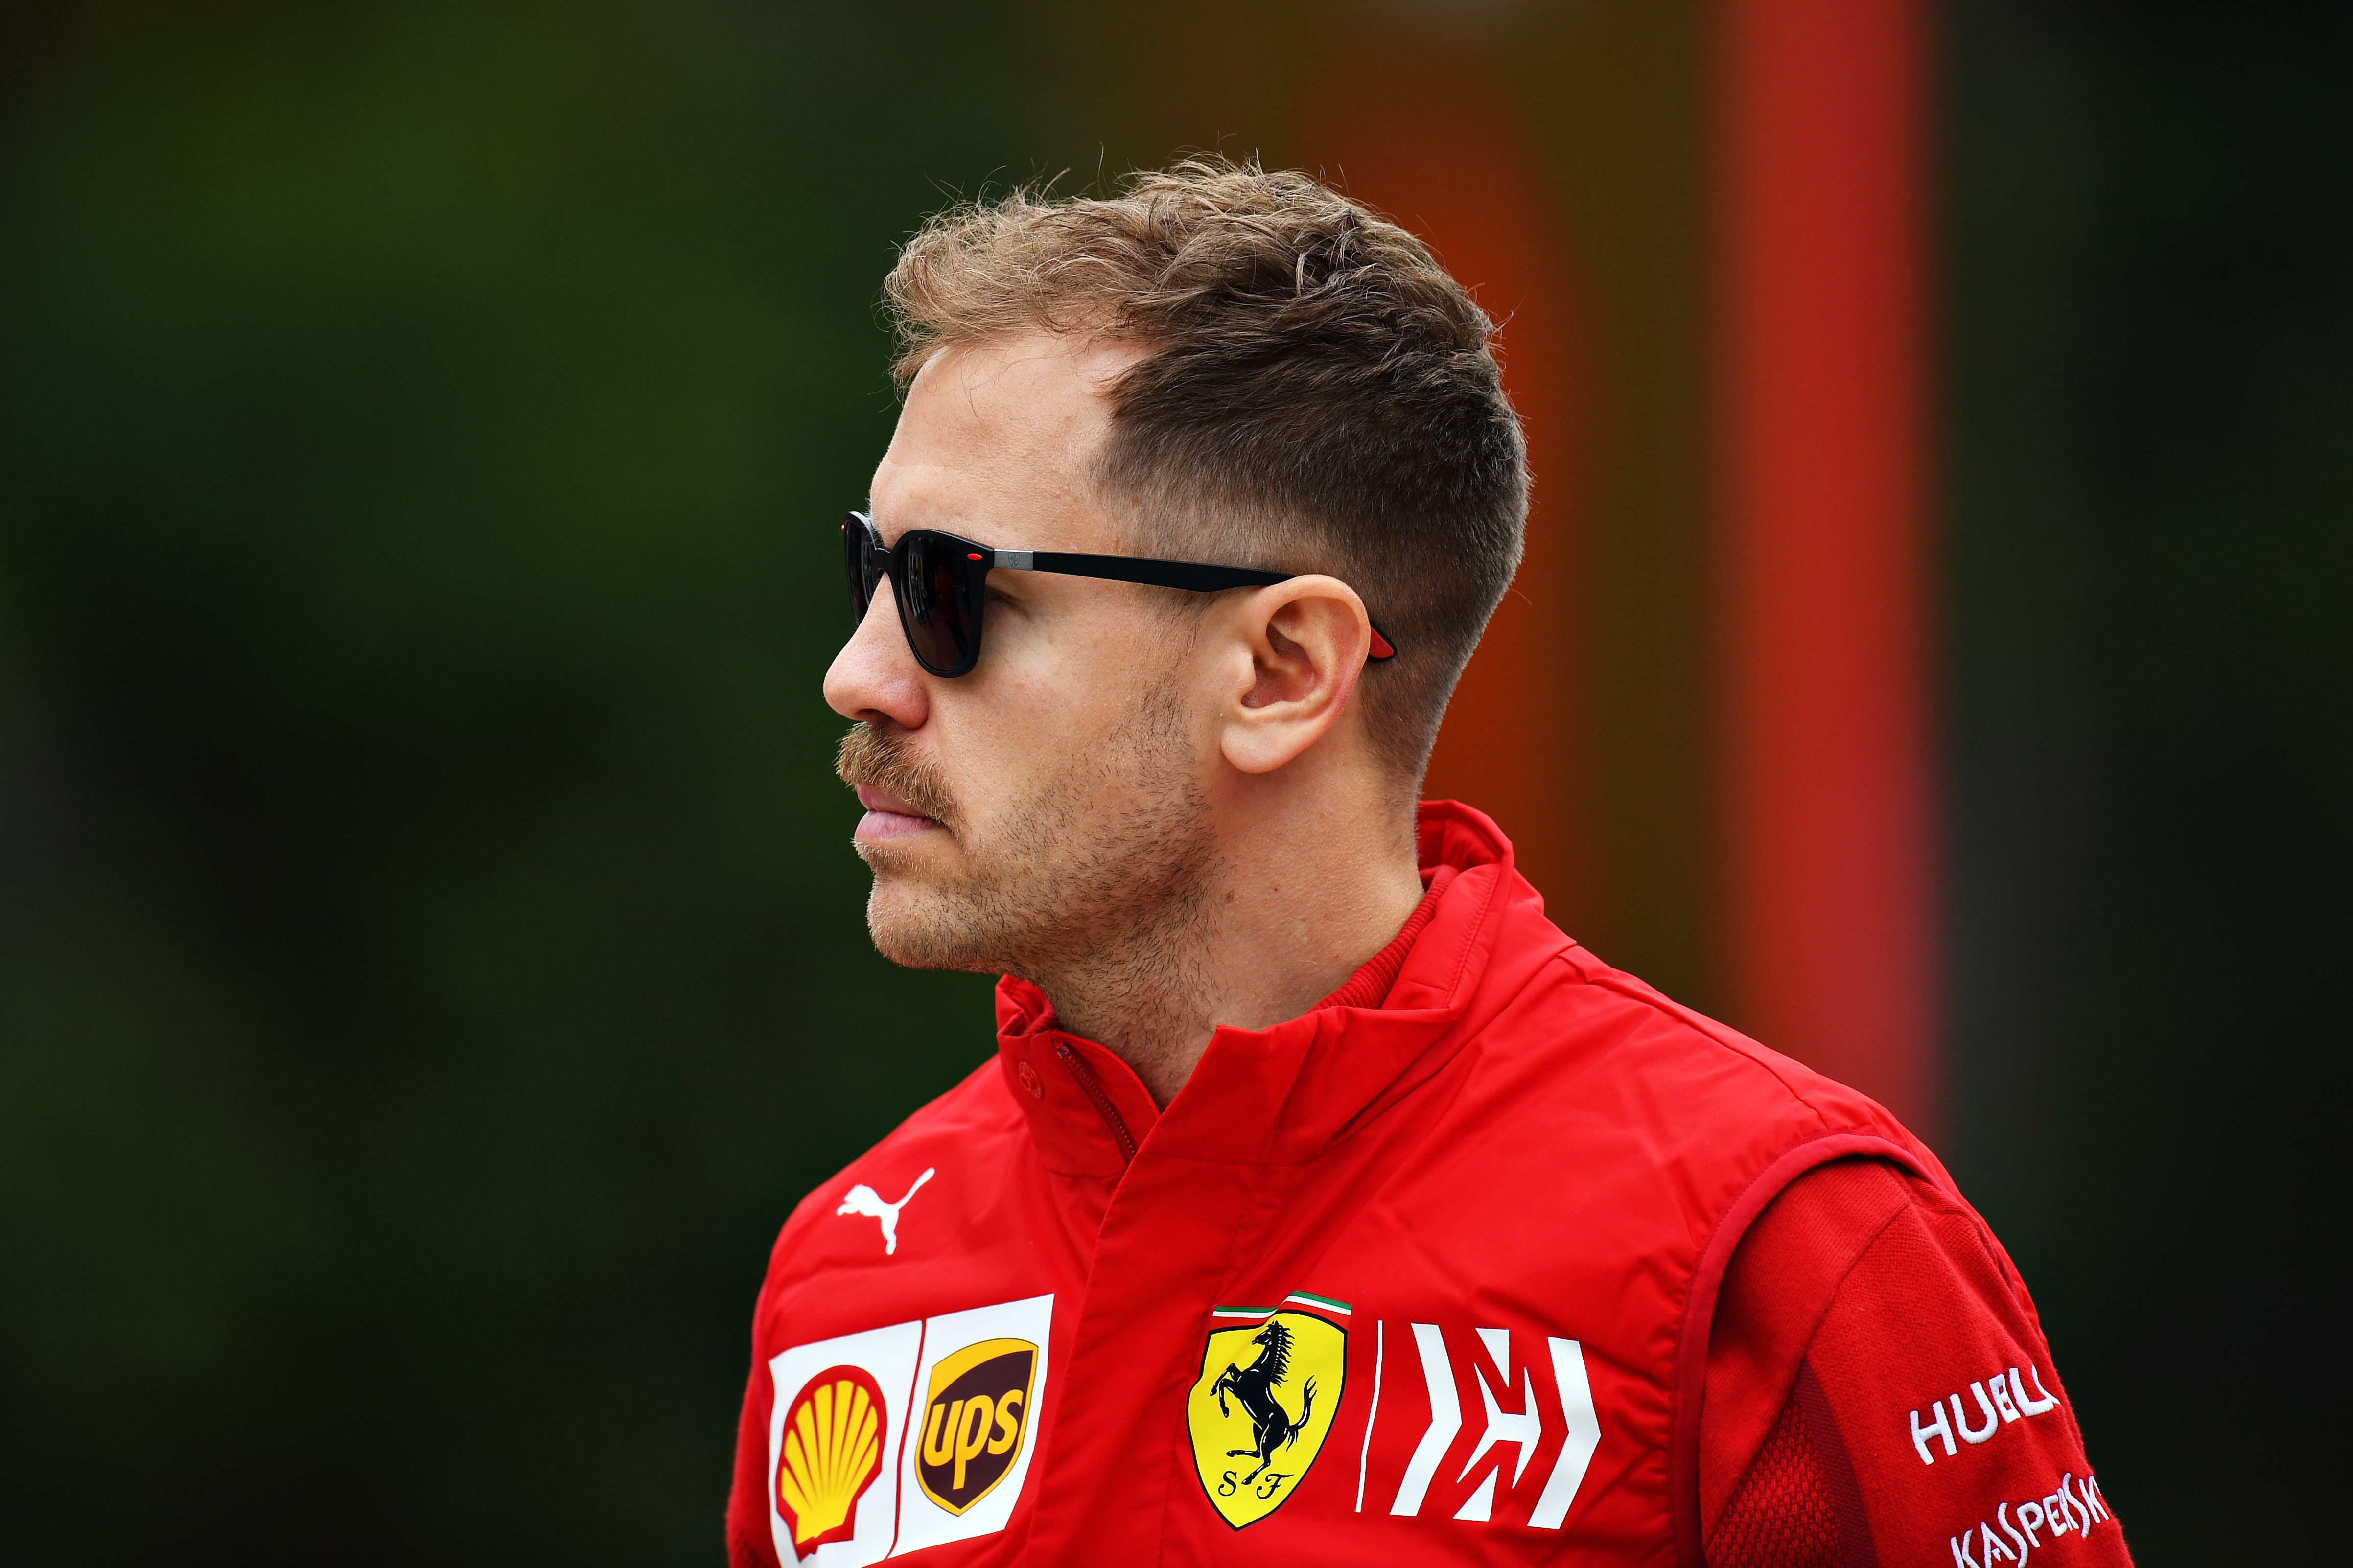 Vettel quando ainda era da Ferrari (Foto: Getty Images)